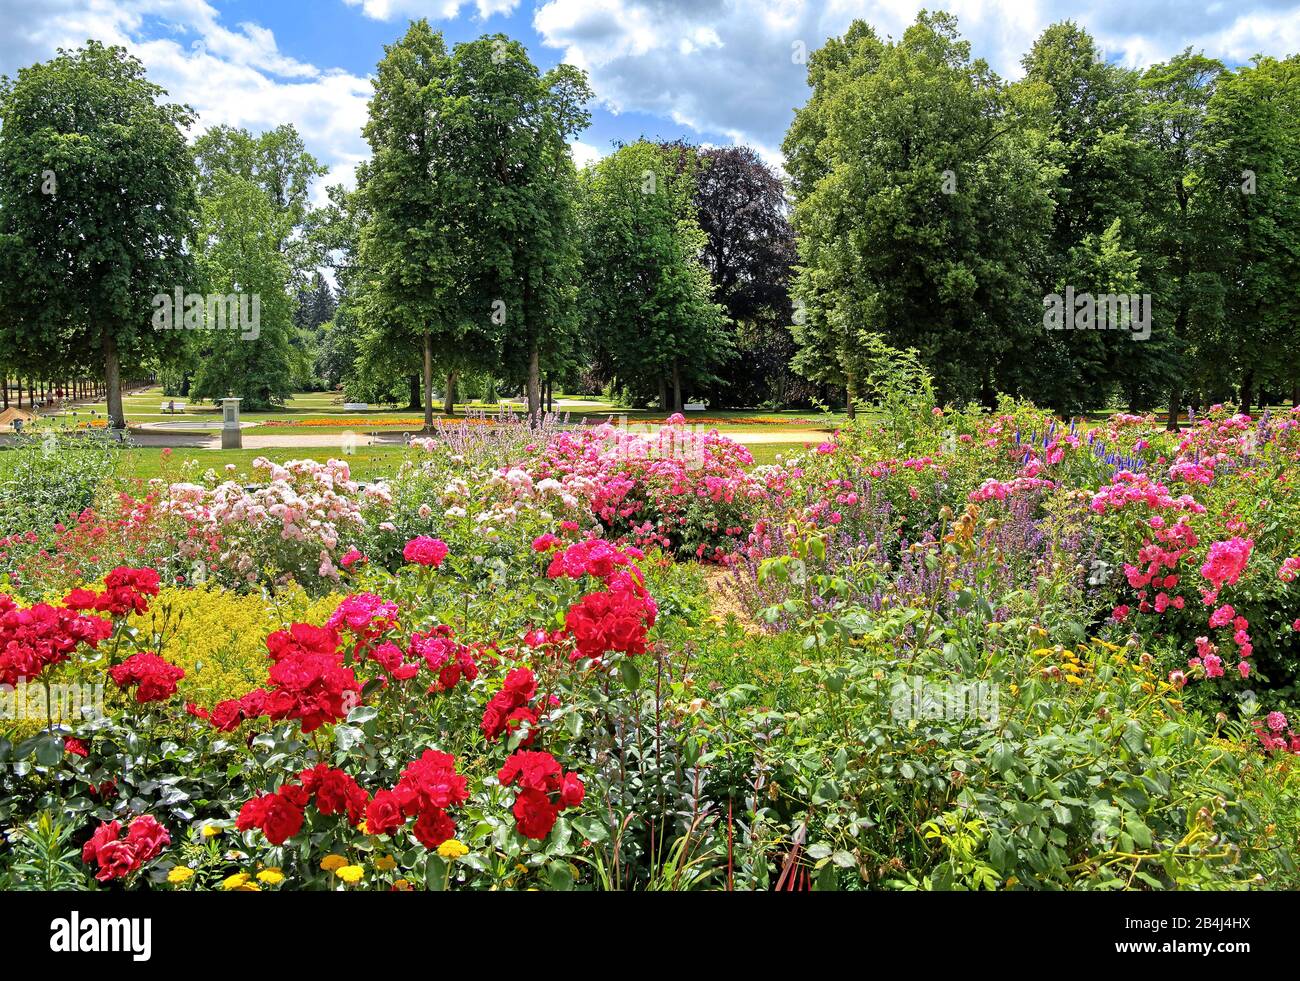 Palaisgarten Rosengarten dans le parc thermal Bad Pyrmont, Staatsbad Emmertal, Weserbergland, Basse-Saxe, Allemagne Banque D'Images